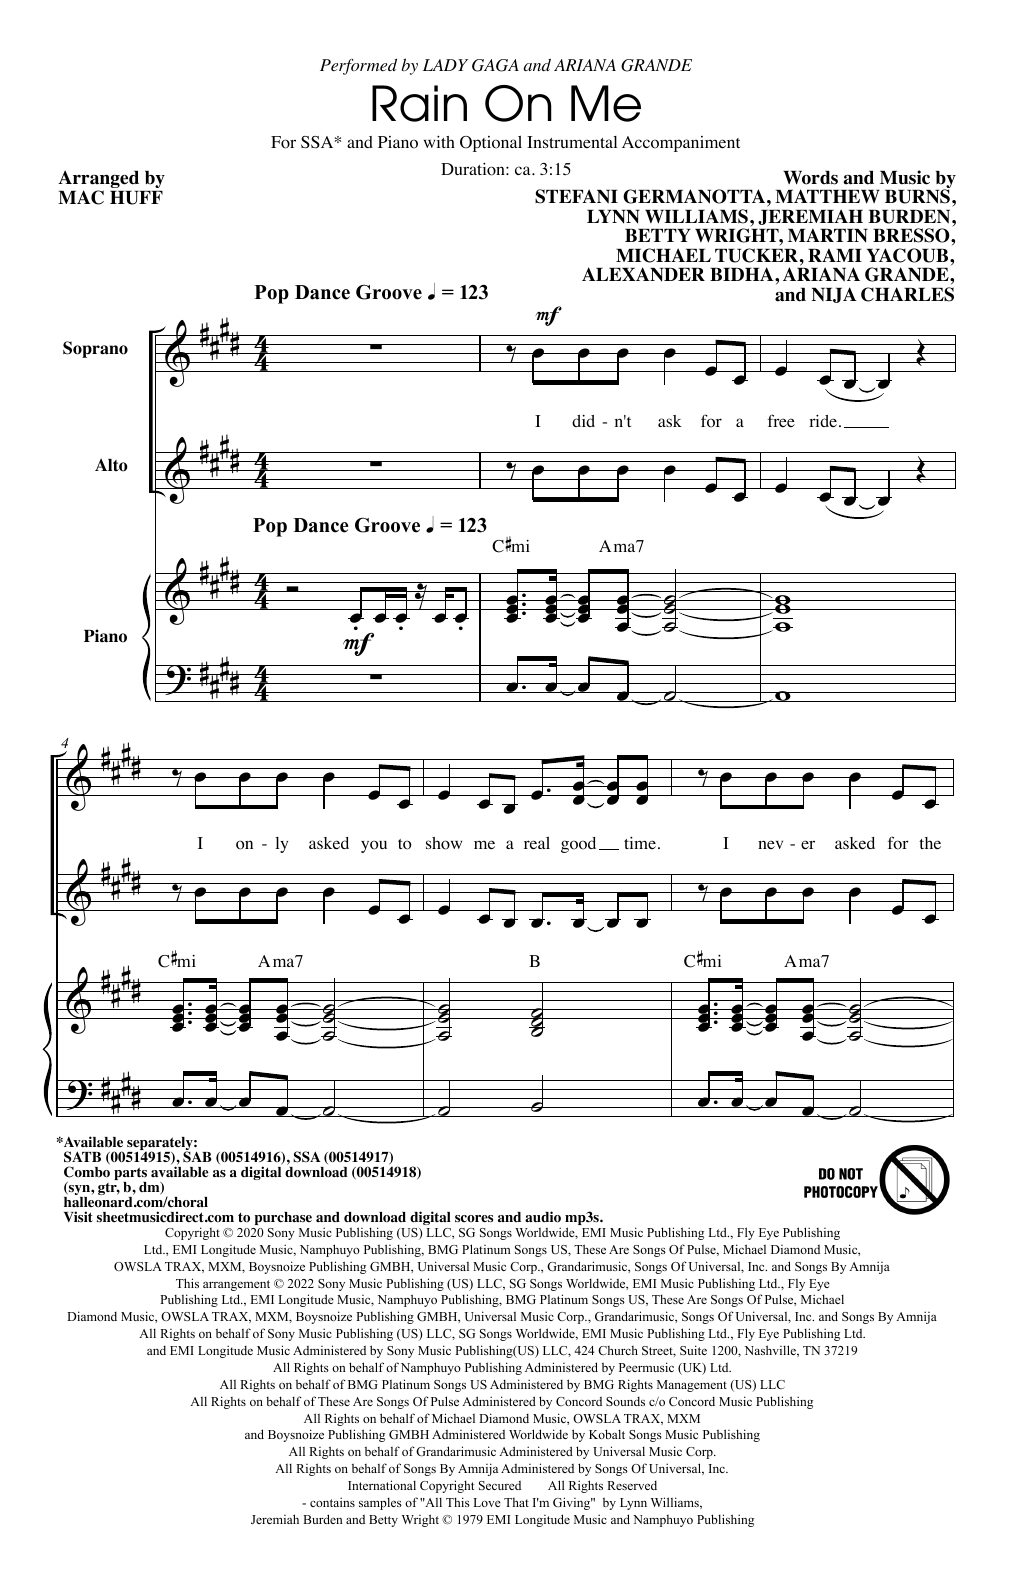 Lady Gaga & Ariana Grande Rain On Me (arr. Mac Huff) Sheet Music Notes & Chords for SSA Choir - Download or Print PDF